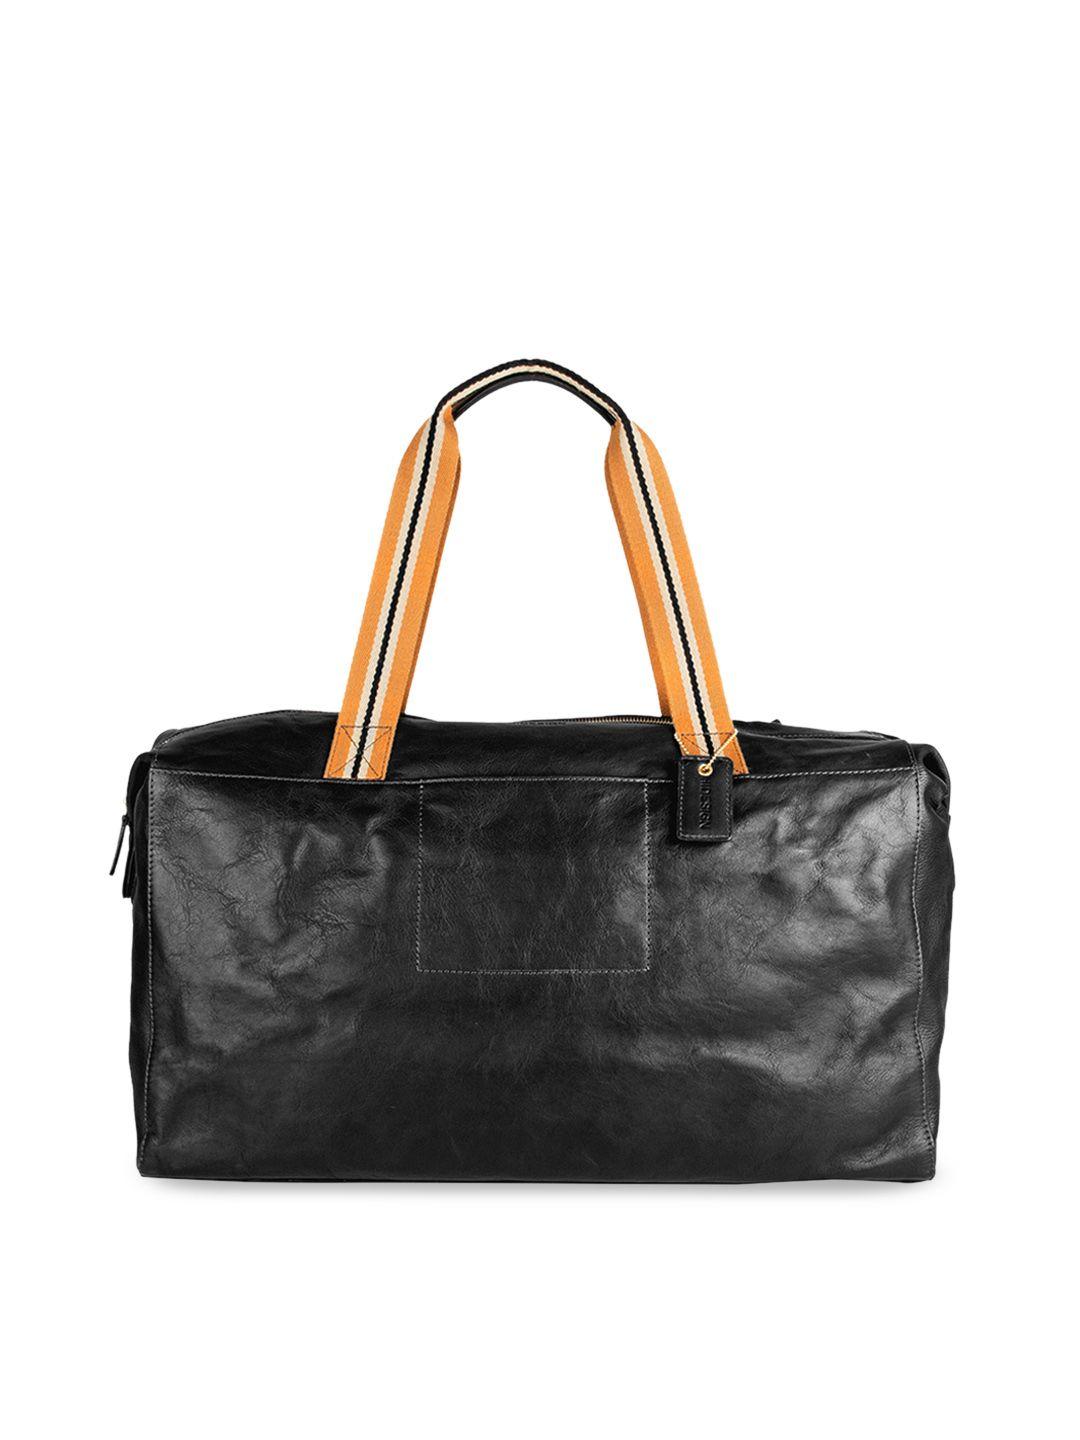 hidesign-men-black-solid-leather-duffel-bag